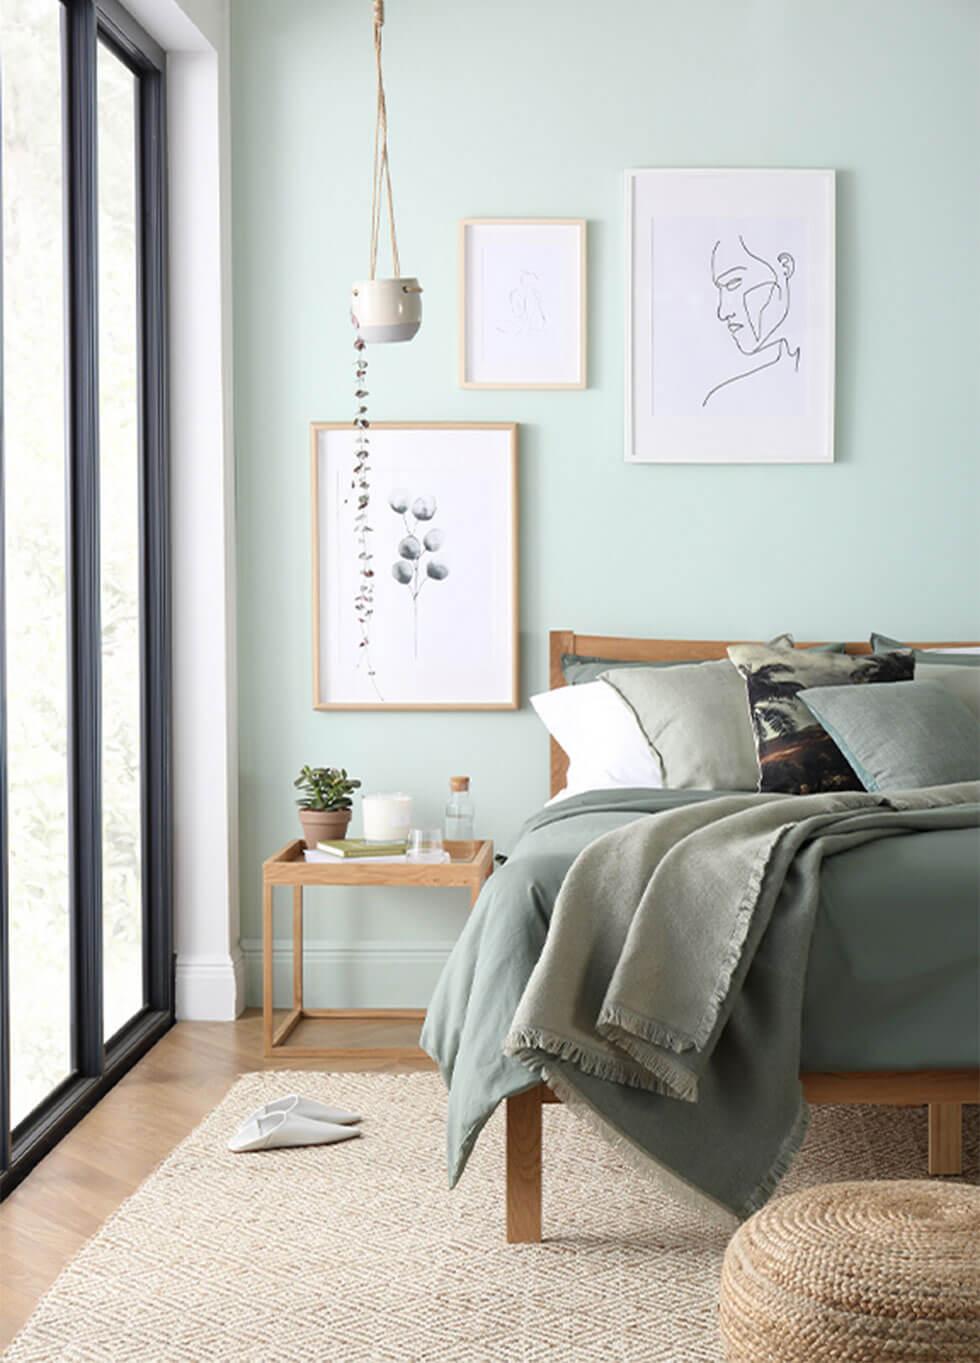 Sage green walls in a calm serene bedroom